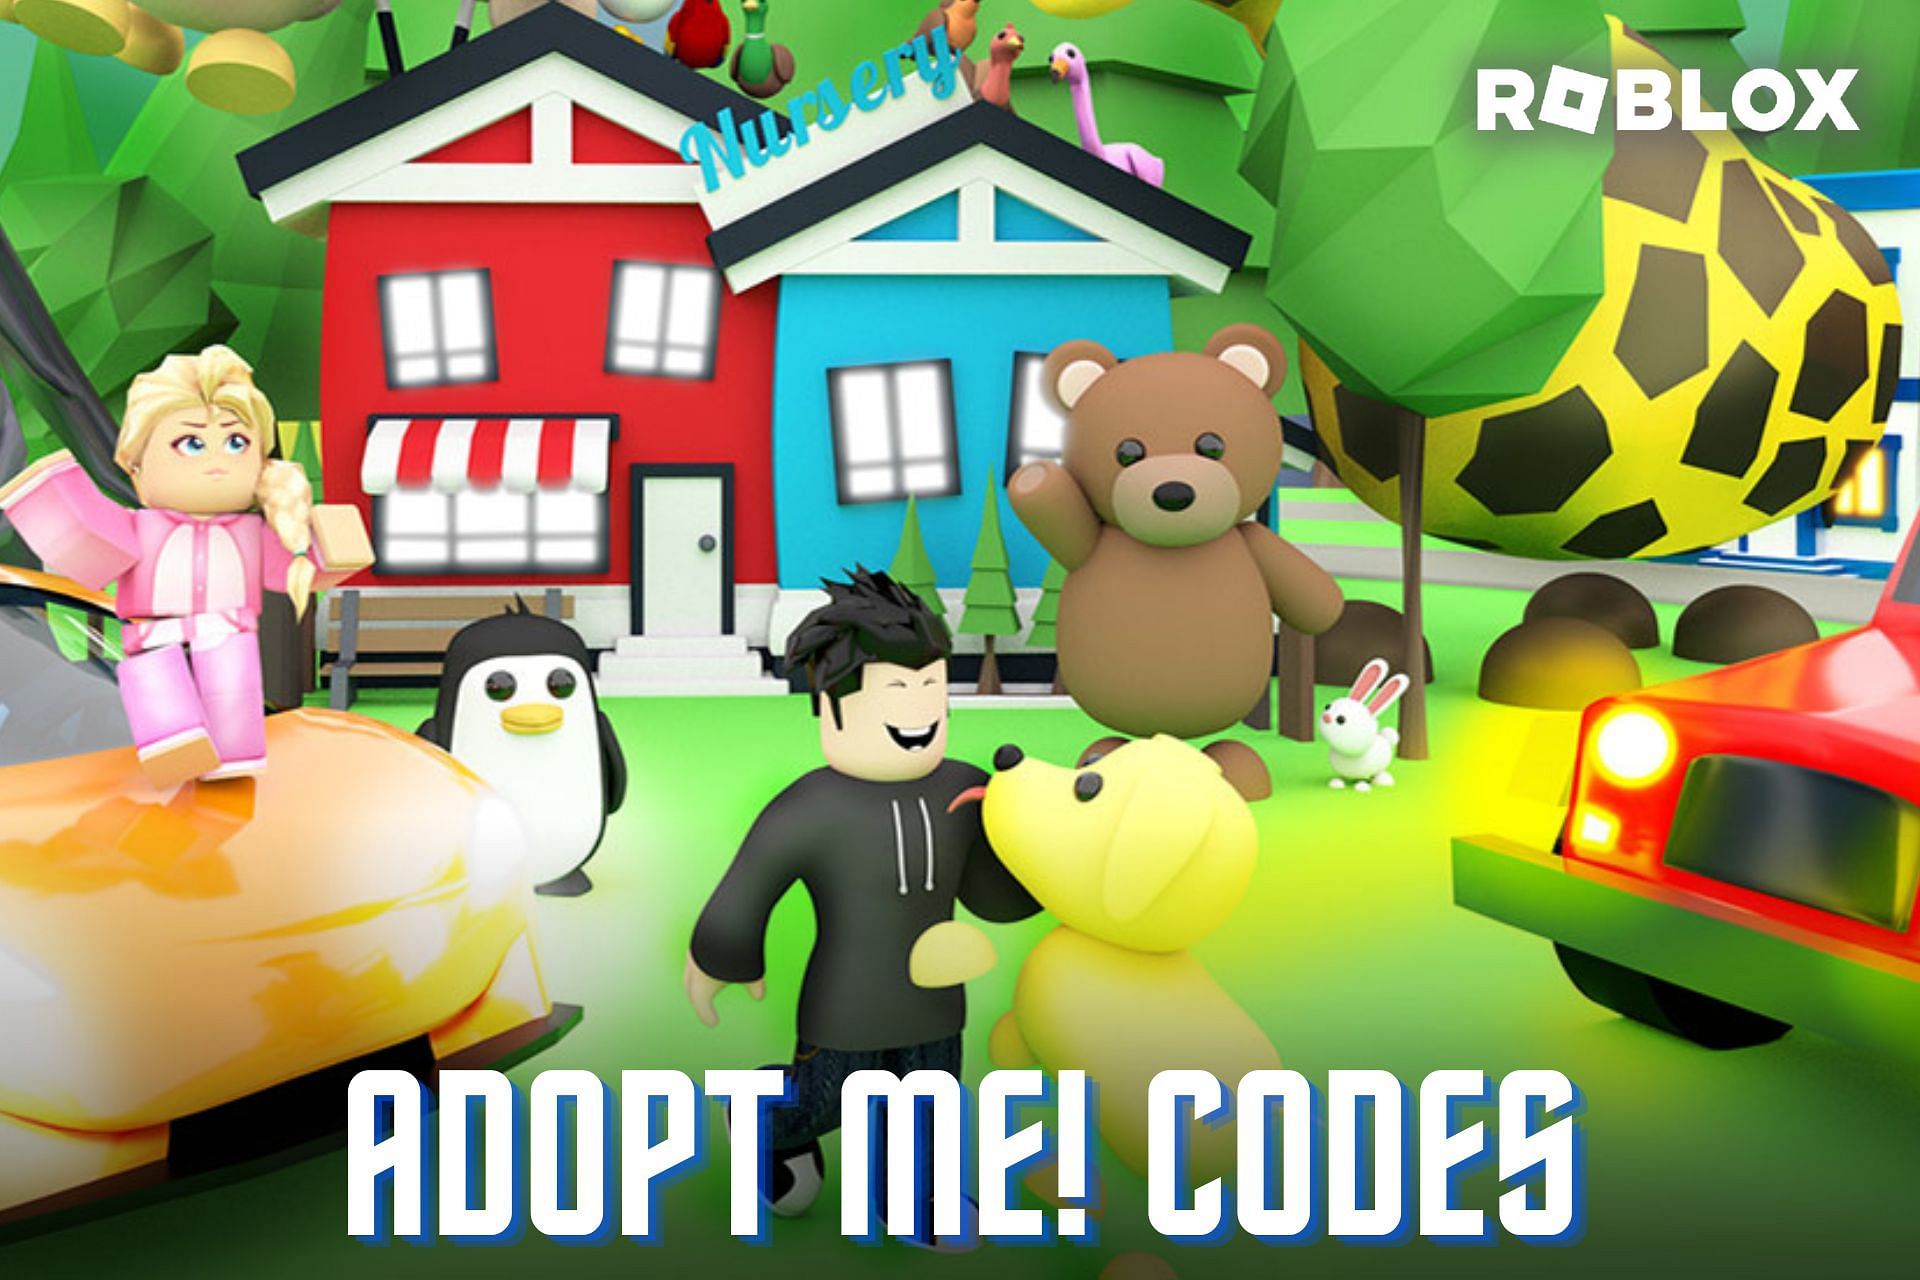 Adopt me - Roblox